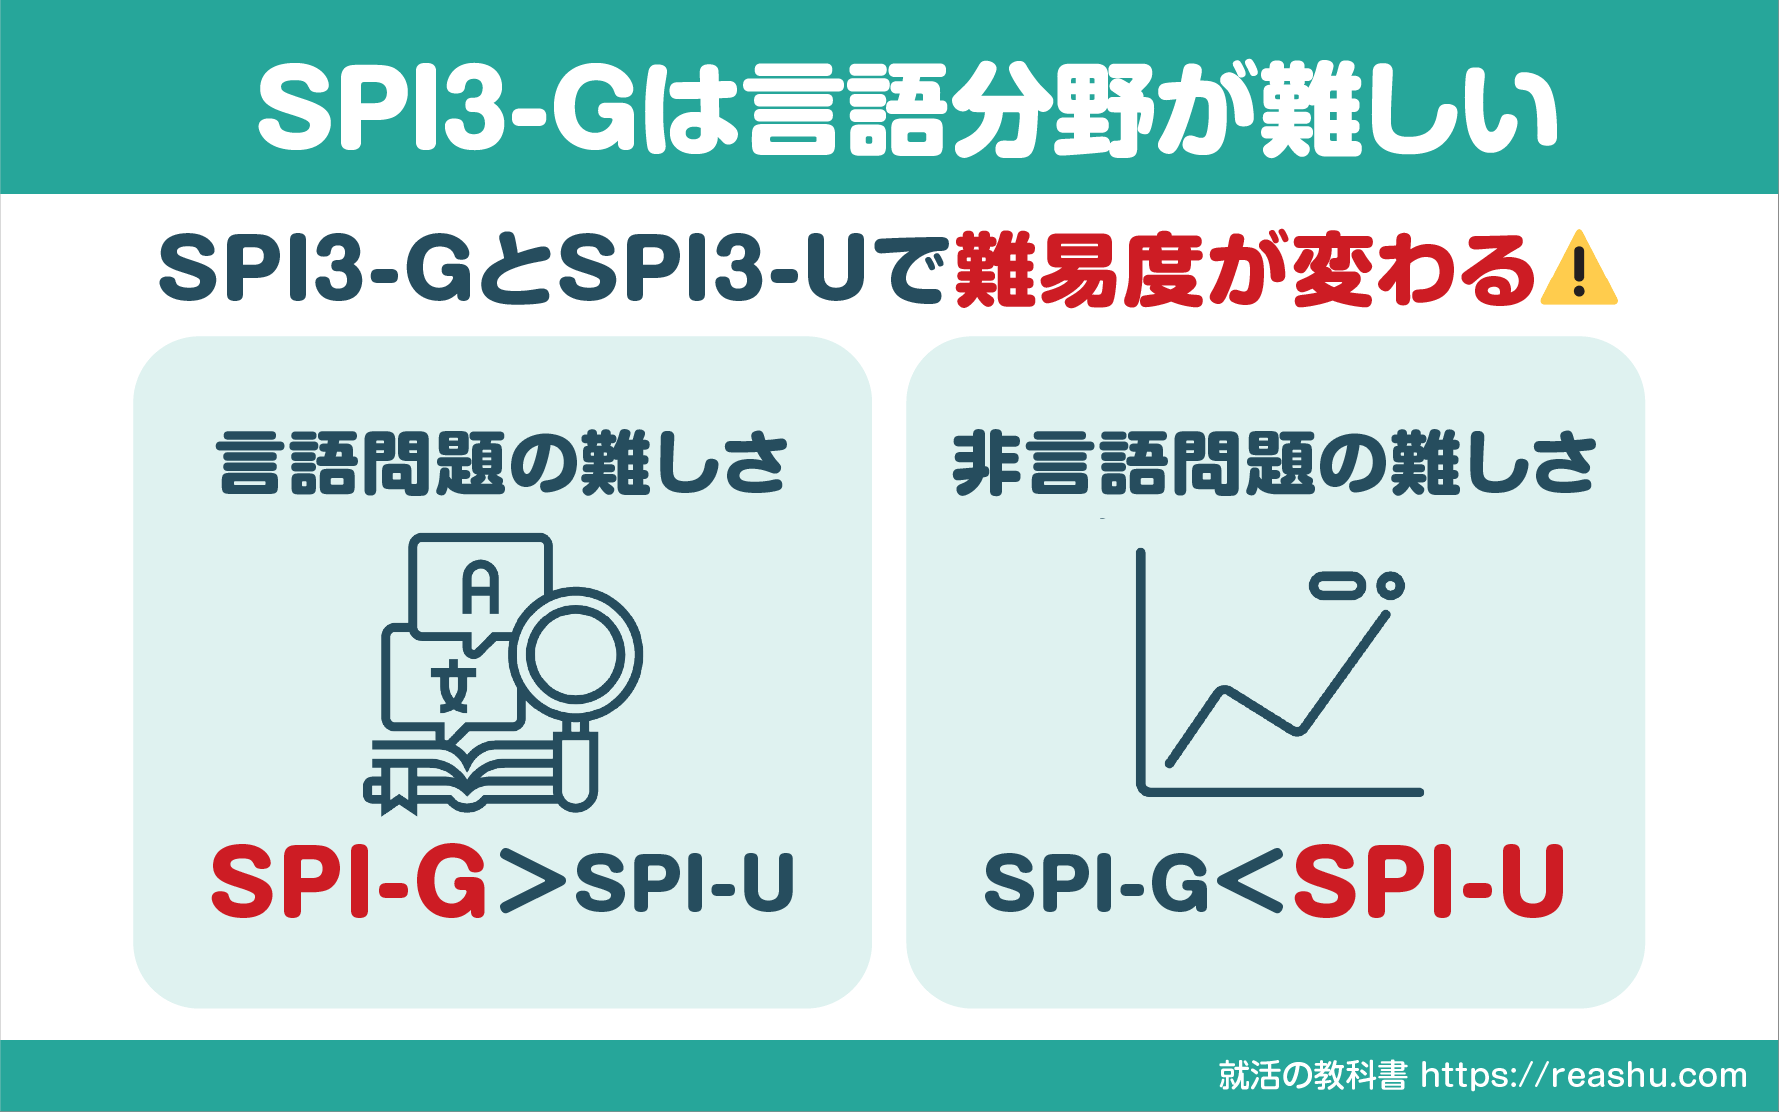 SPI3-Gとは、中途採用向けのSPIのこと